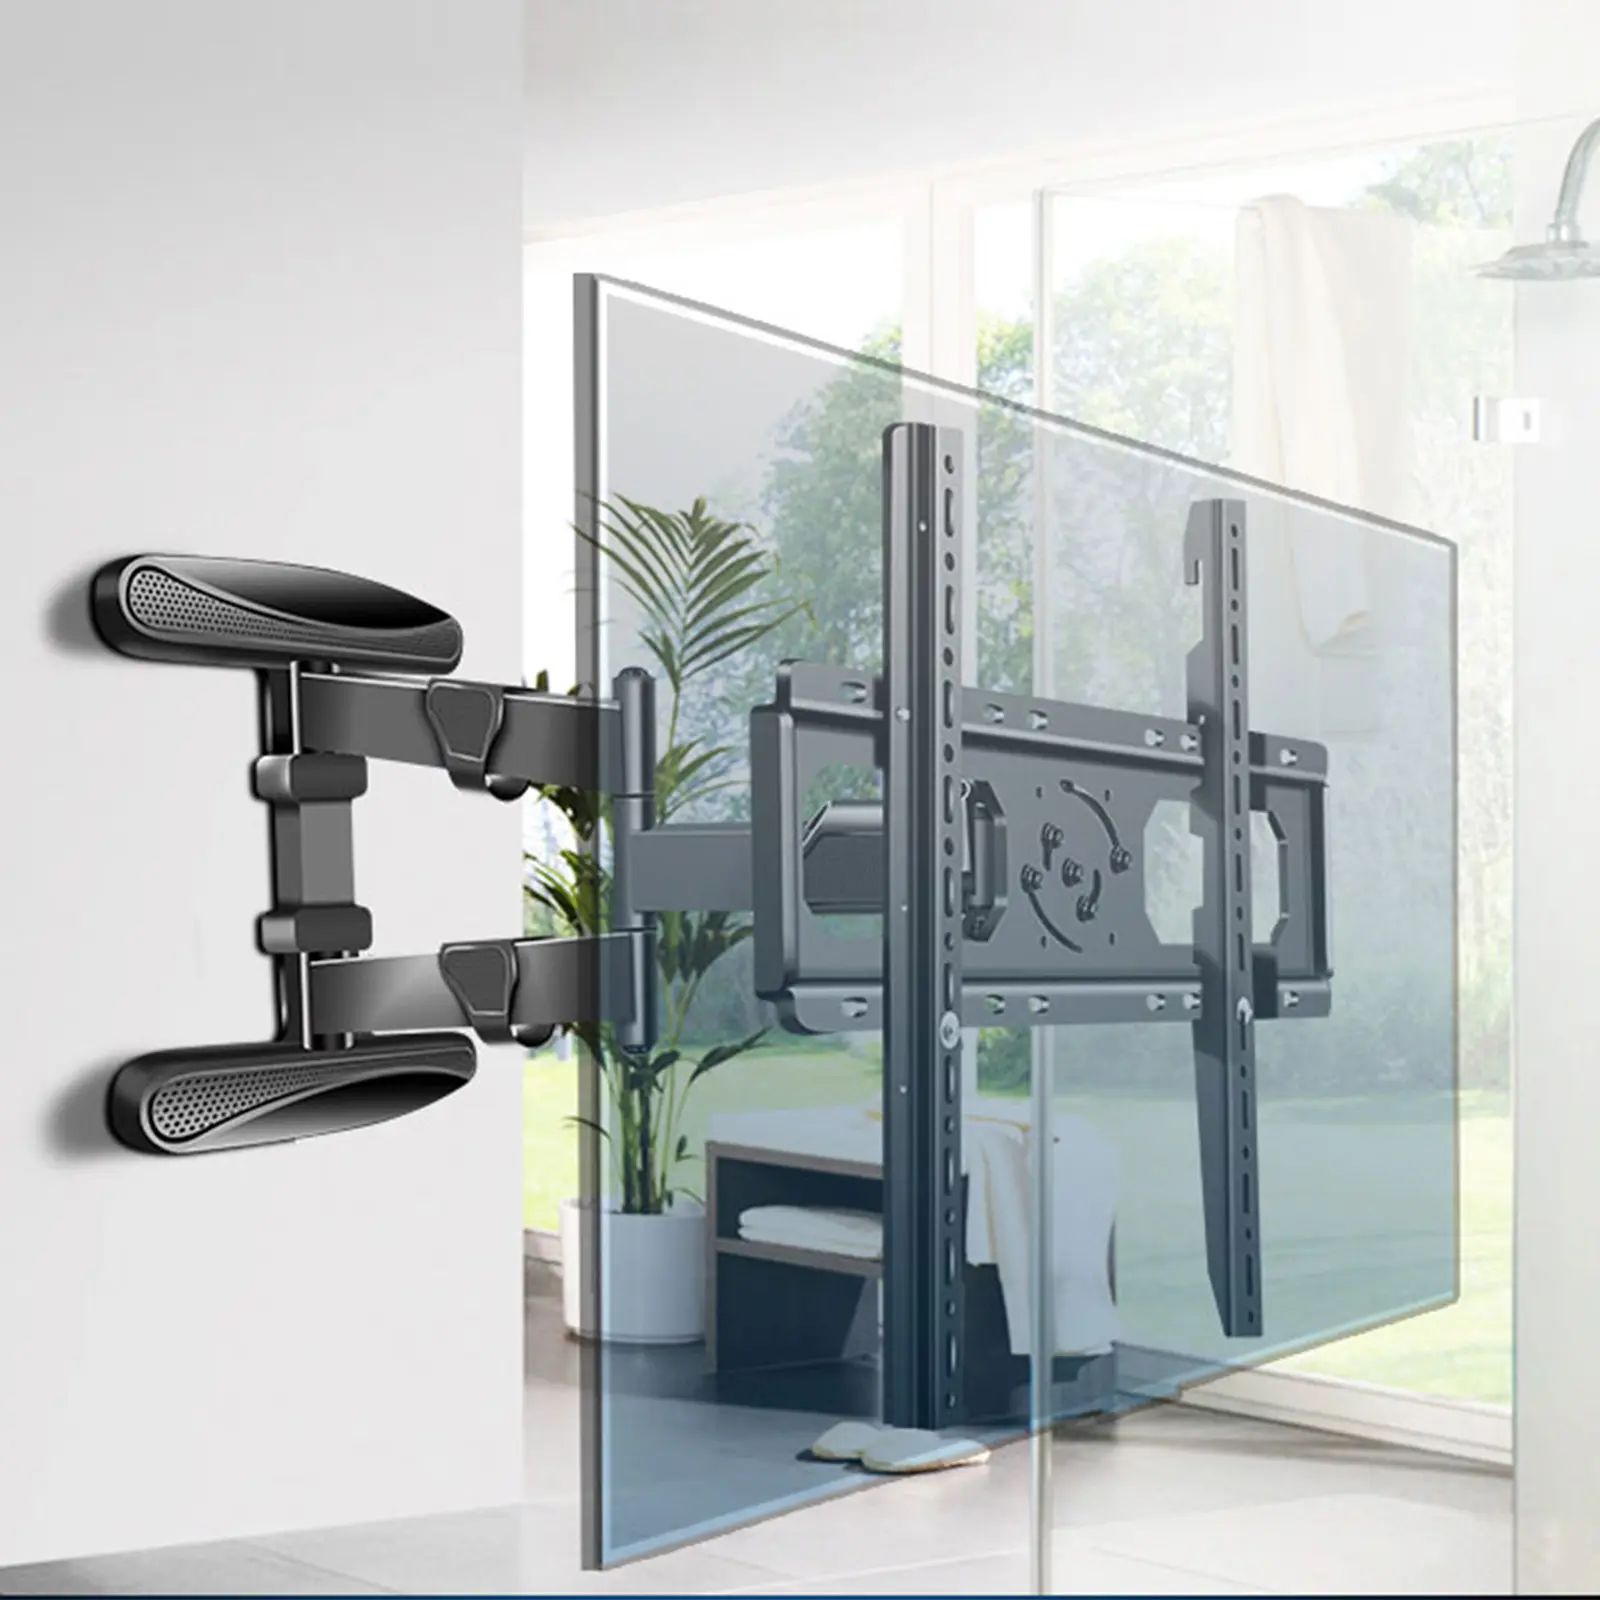 Profissional full-motion 40-80 polegadas Horizontal e vertical tela tv stand wall mount